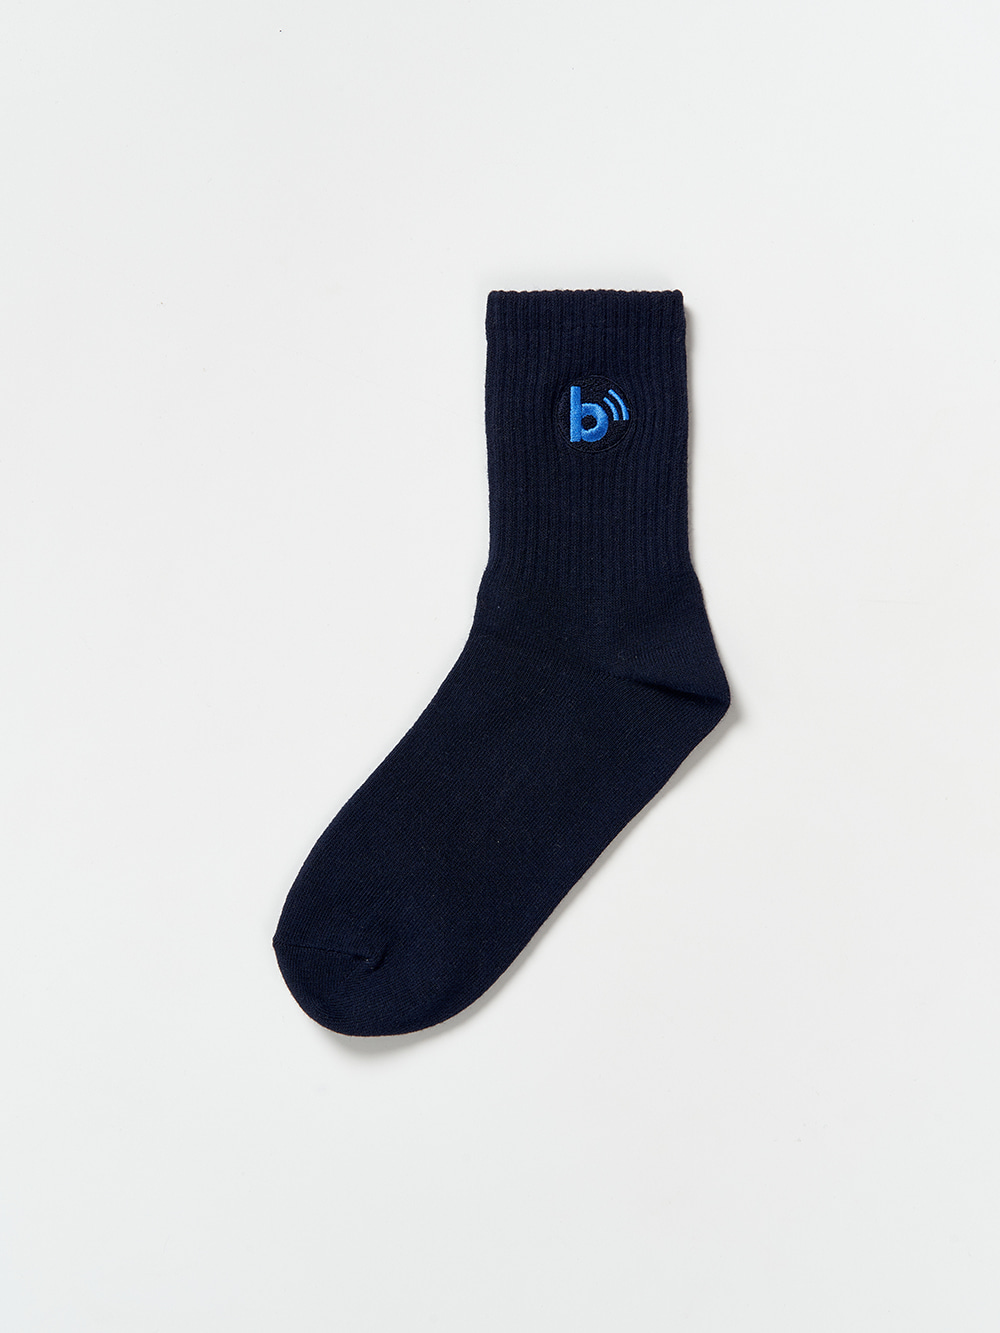 B Logo Basic Socks_Navy